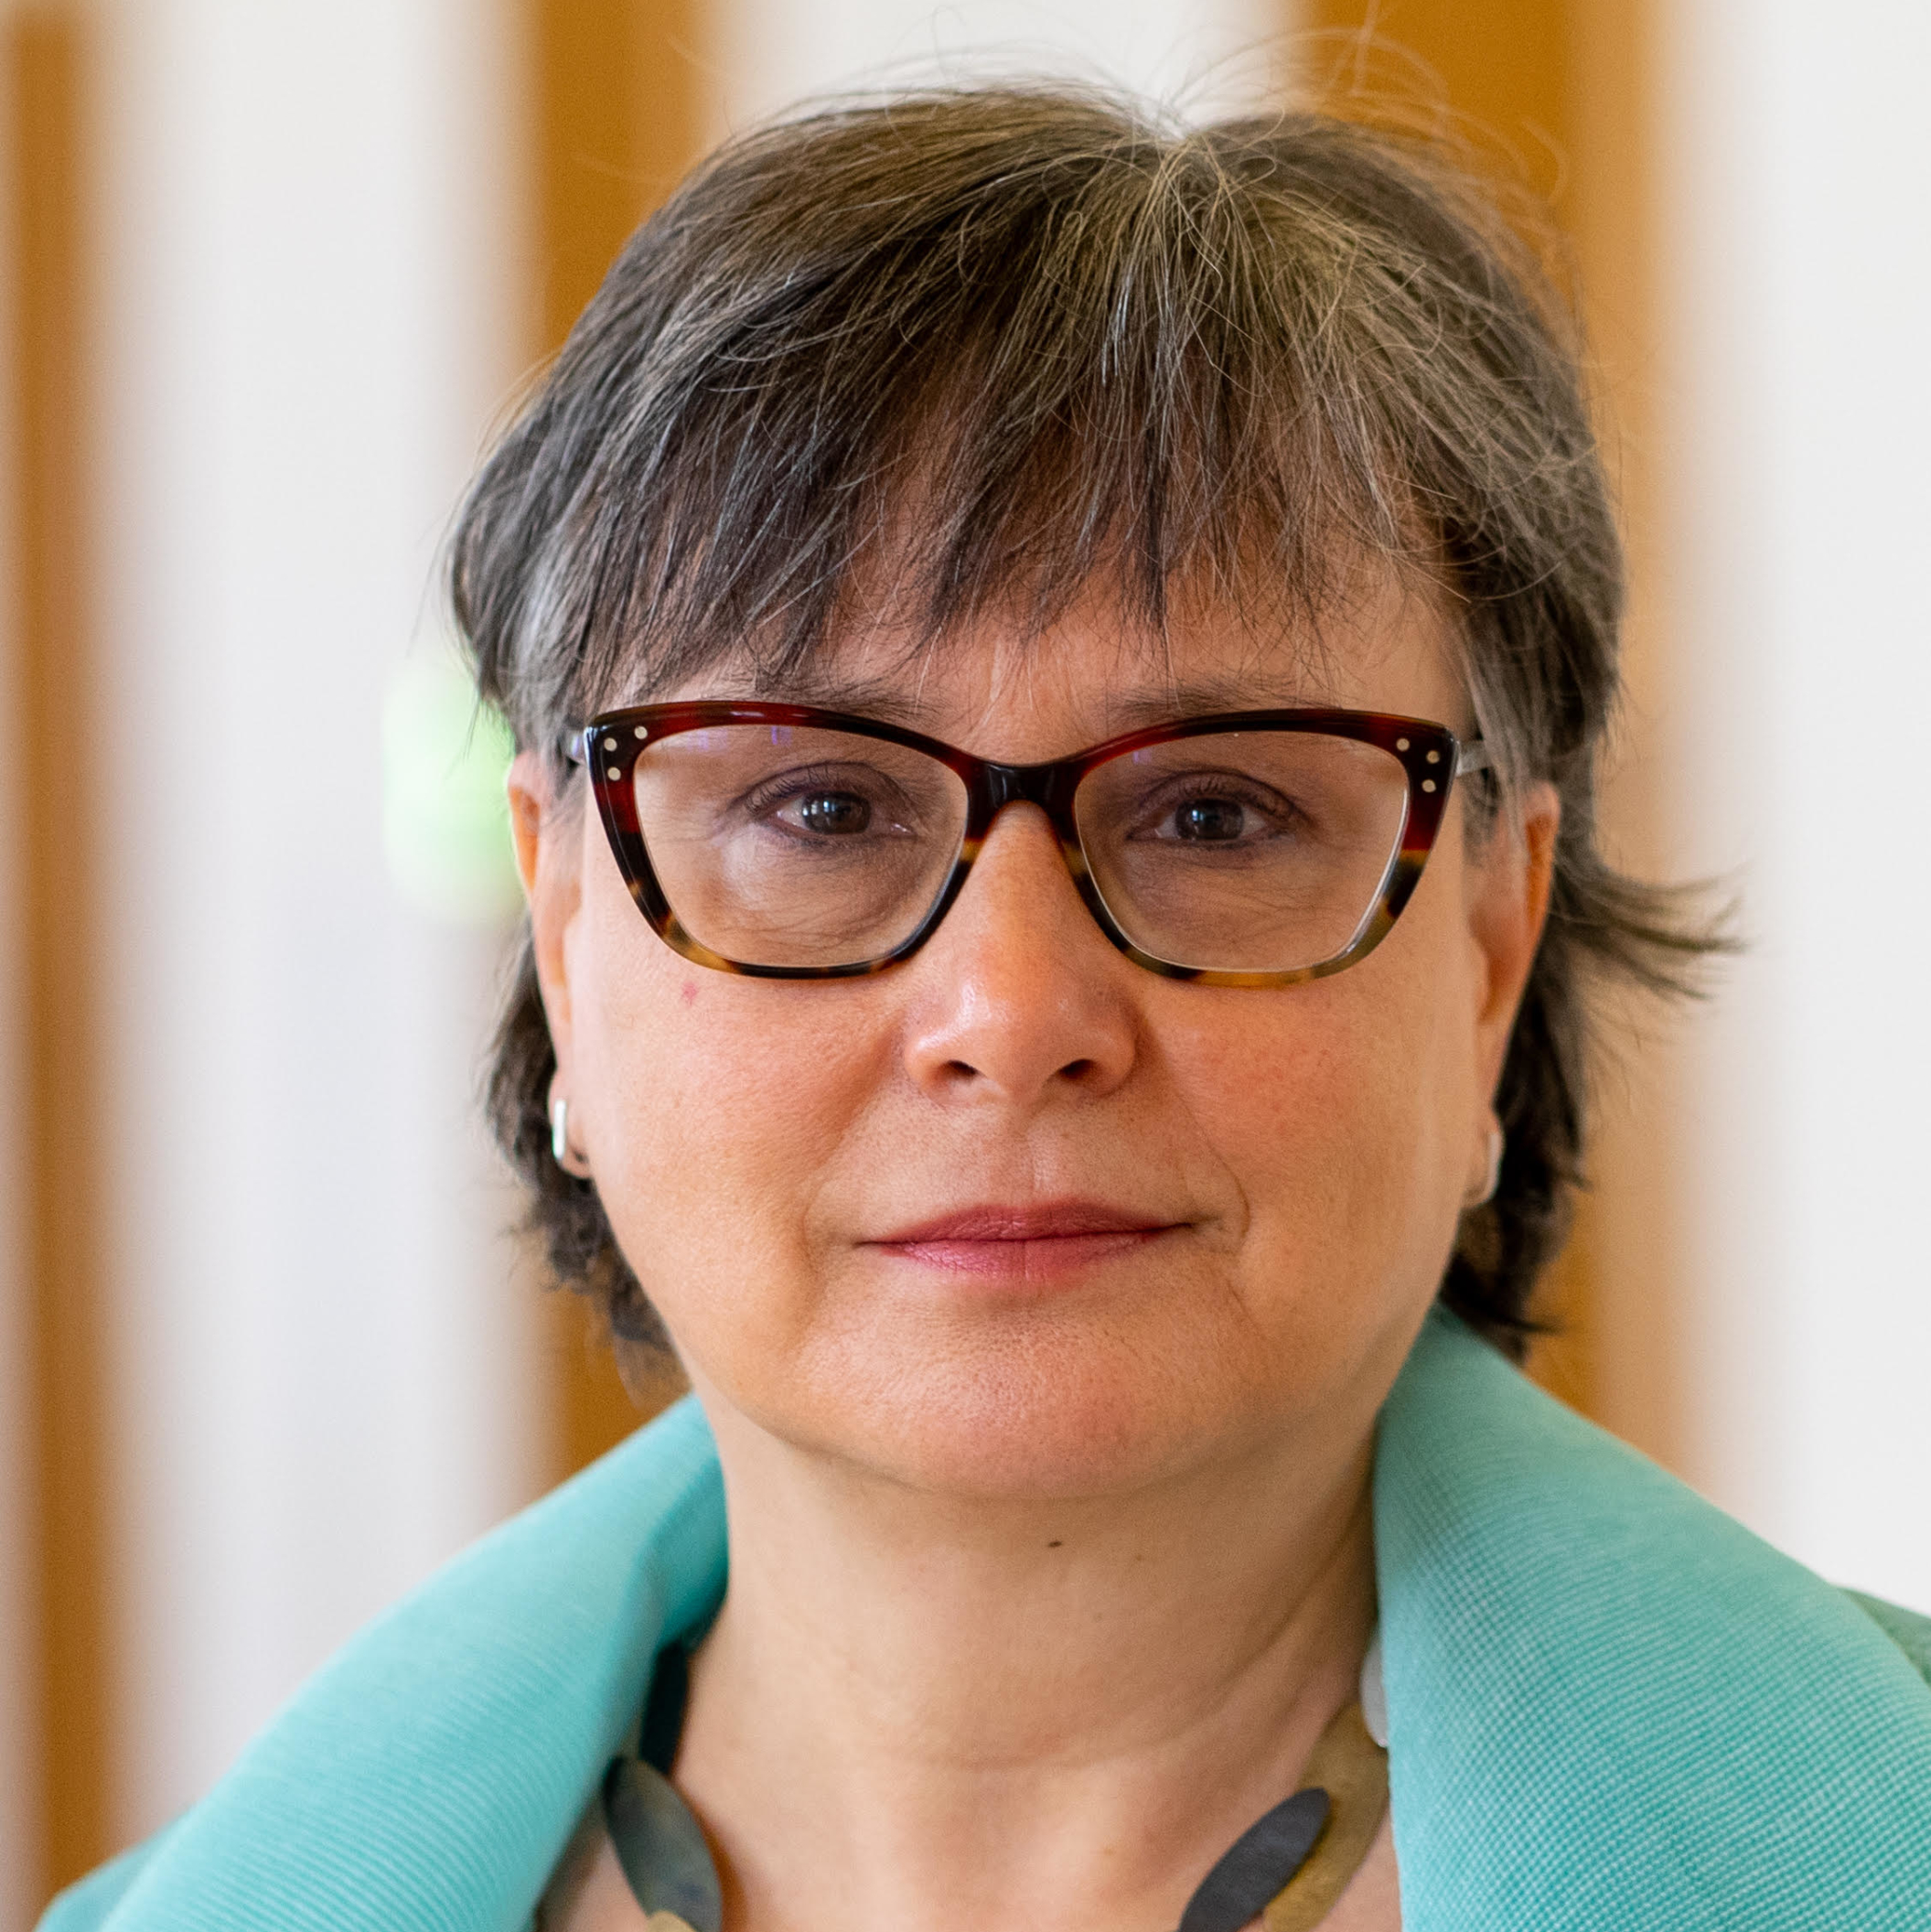 Univ.Prof. Dr. Renate Kain, PhD